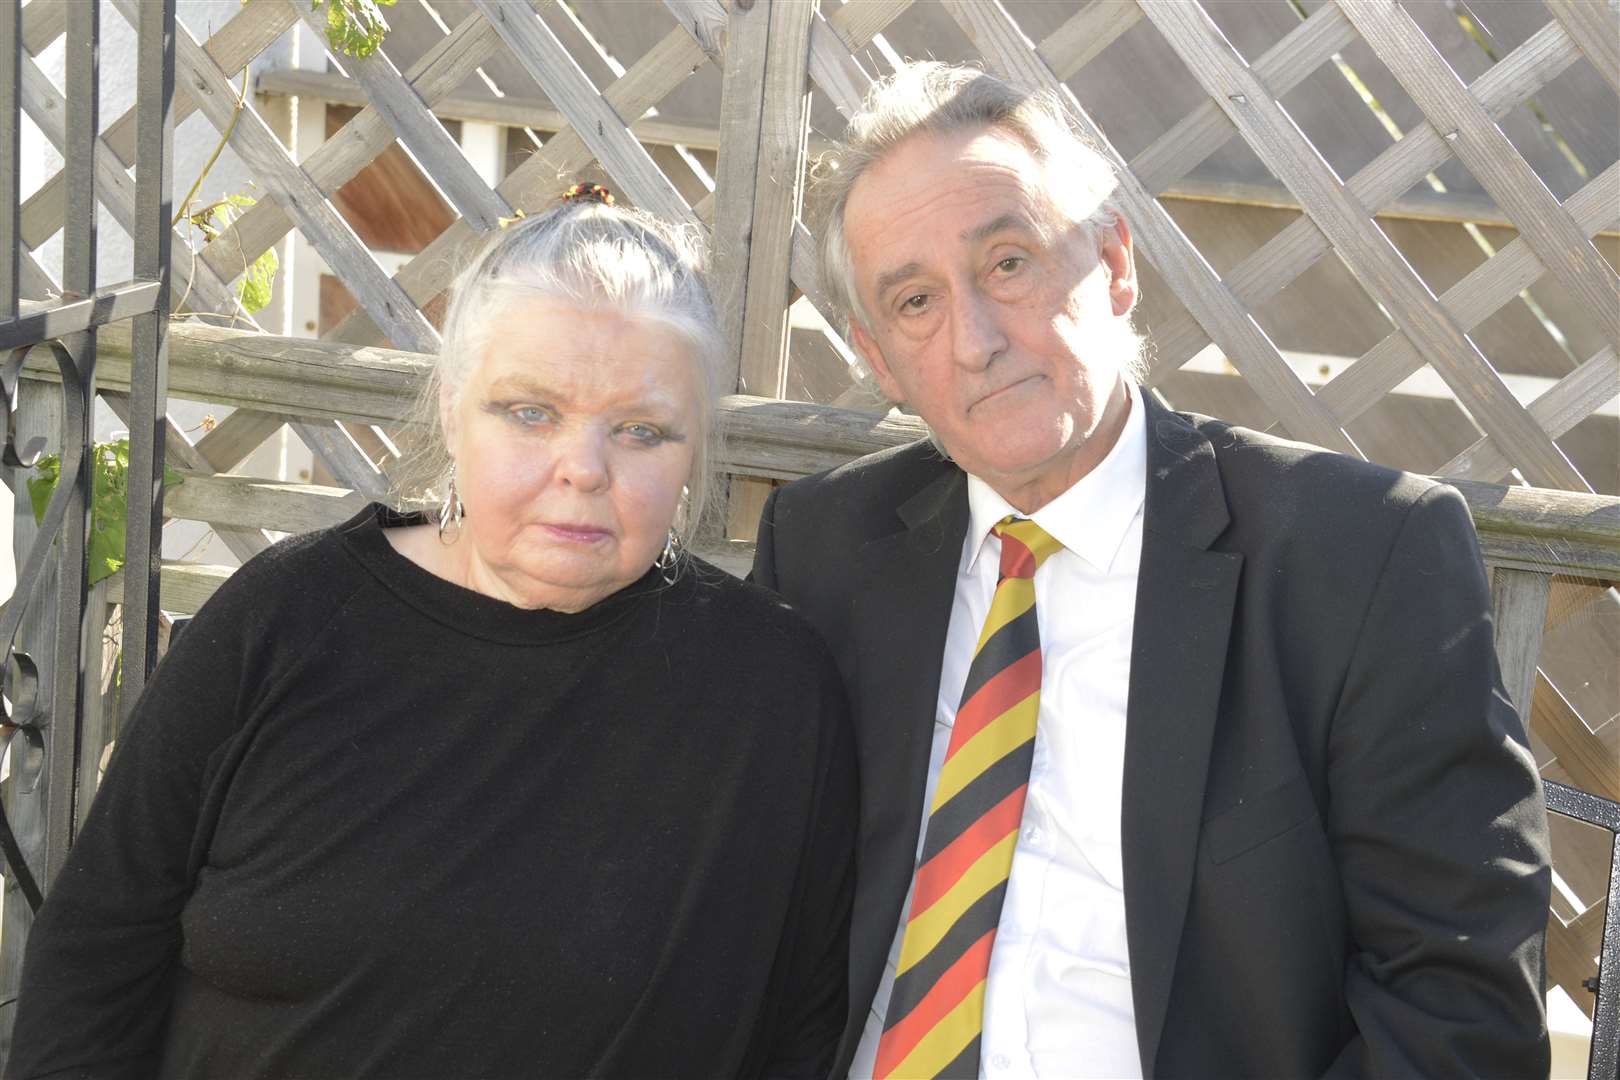 Su Gorman and her husband, Steve Dymond. Picture: Paul Amos